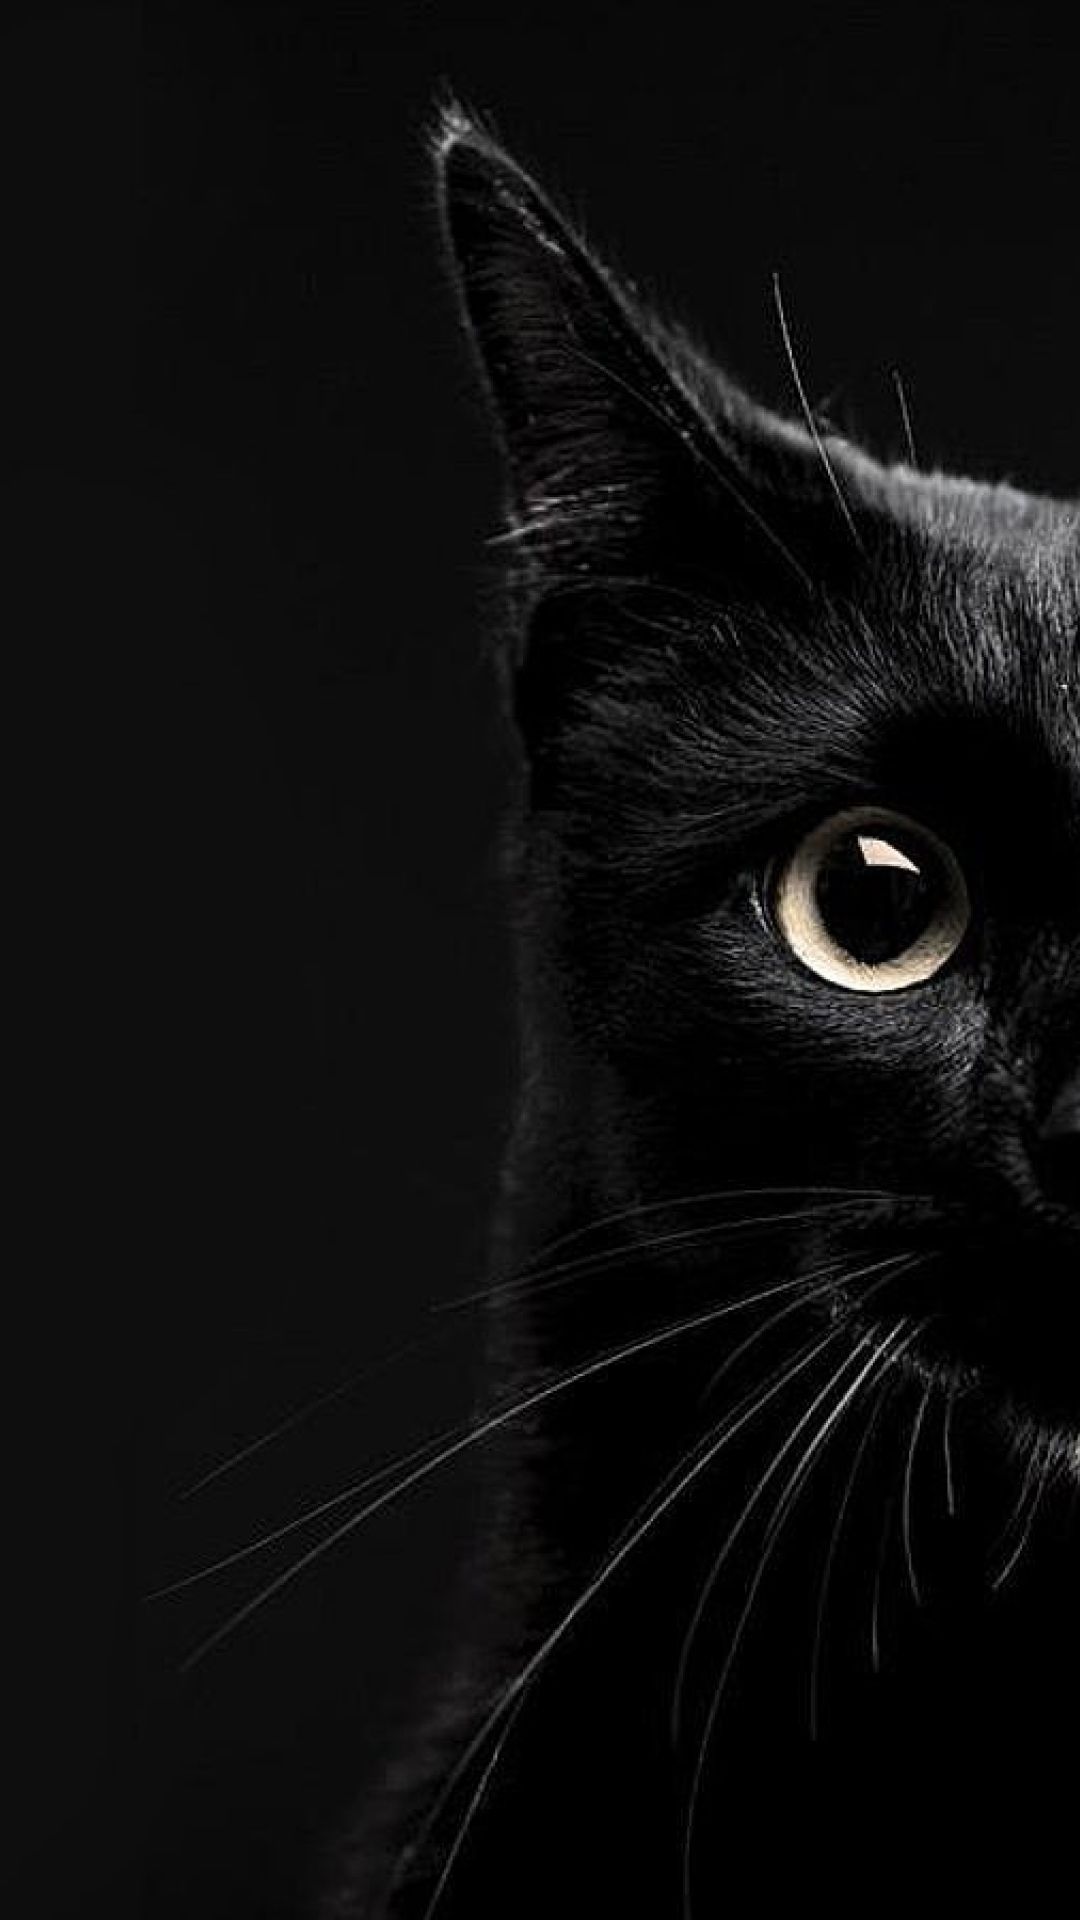 Free Black Cat Wallpaper Downloads 200 Black Cat Wallpapers for FREE   Wallpaperscom